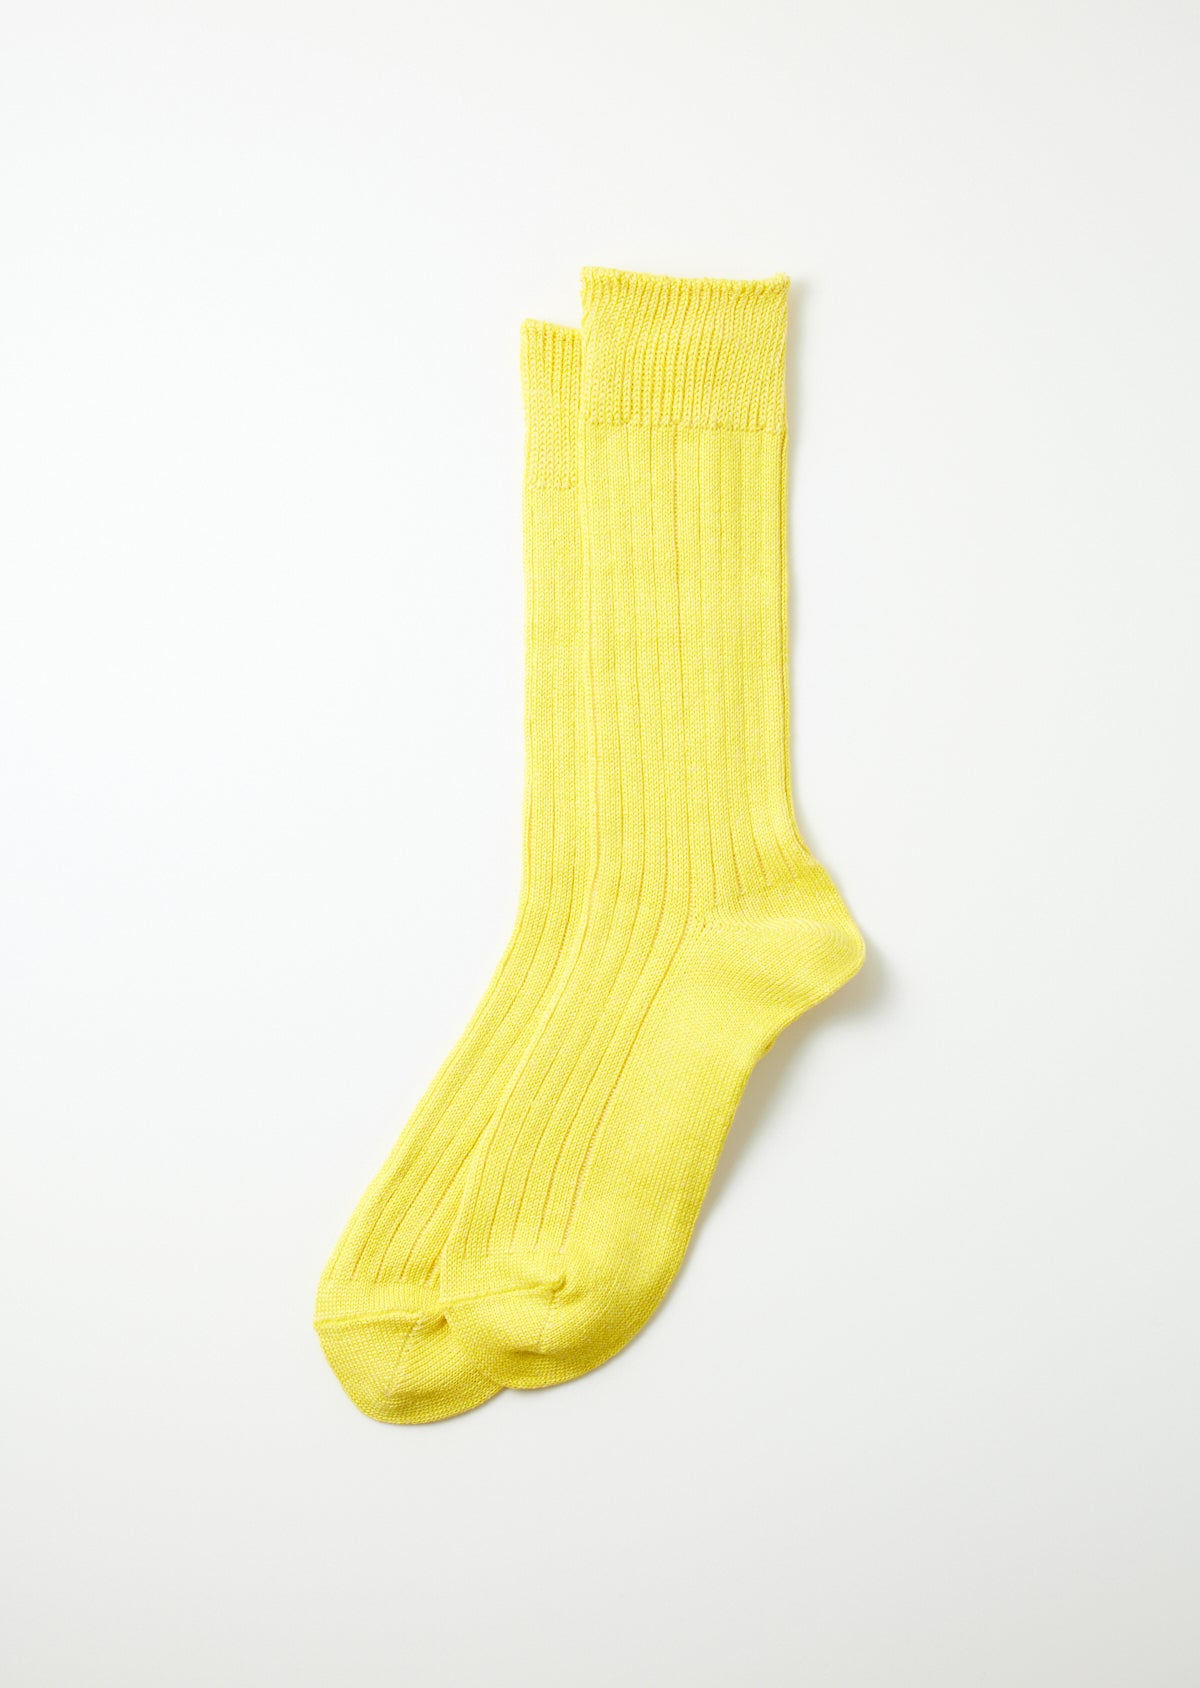 Leinen Baumwolle Socken - lemon